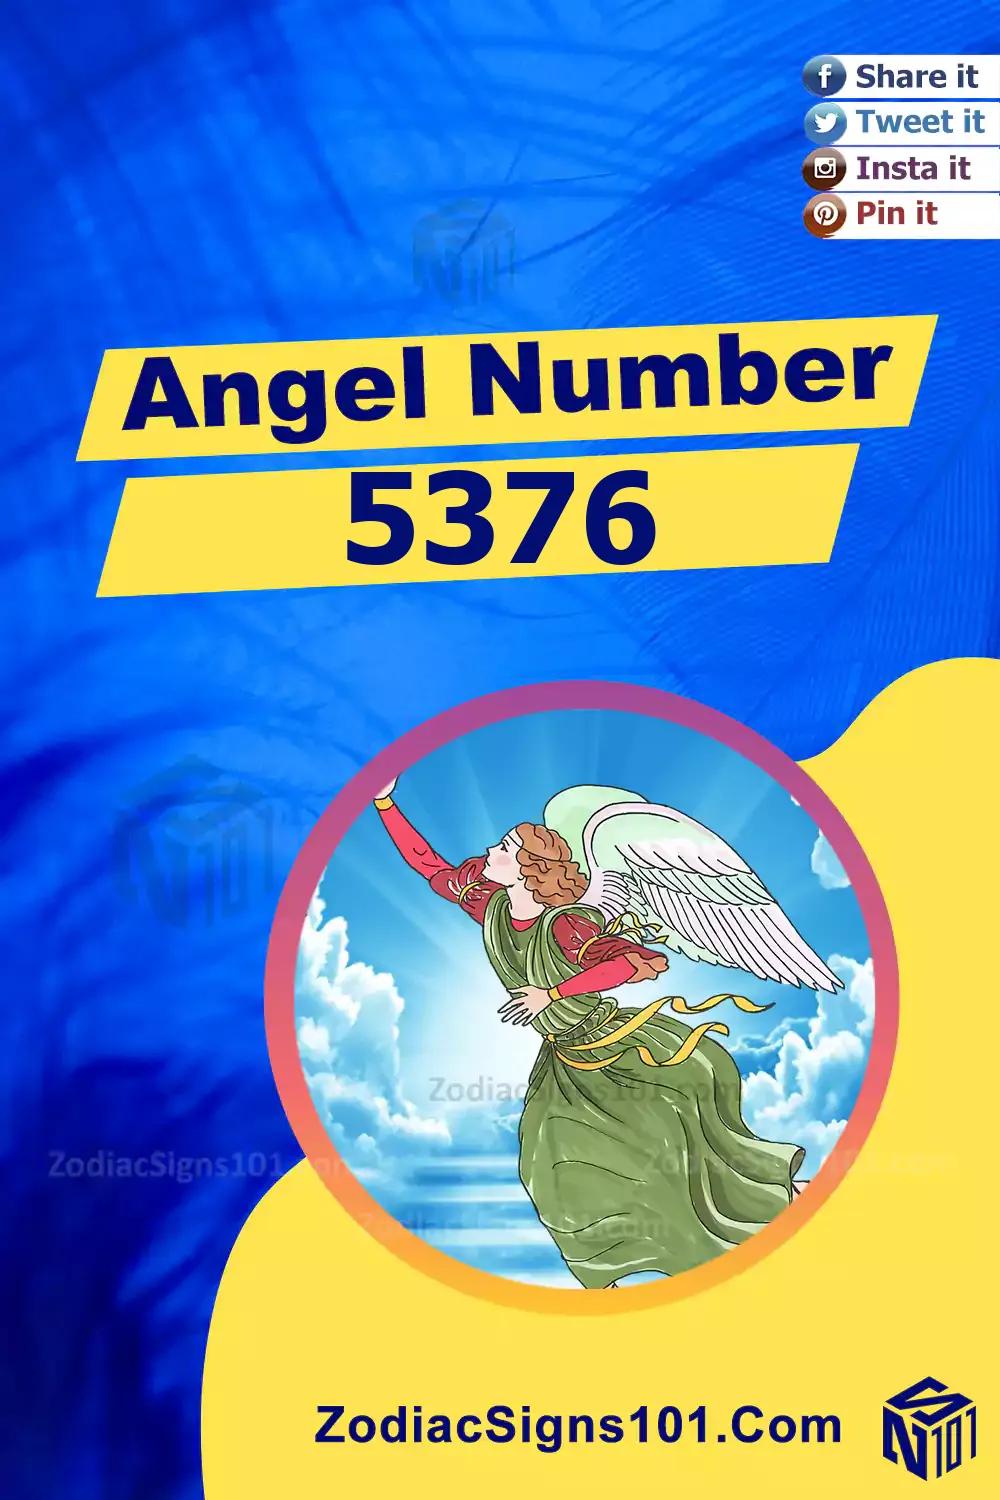 5376-Angel-Number-Meaning.jpg